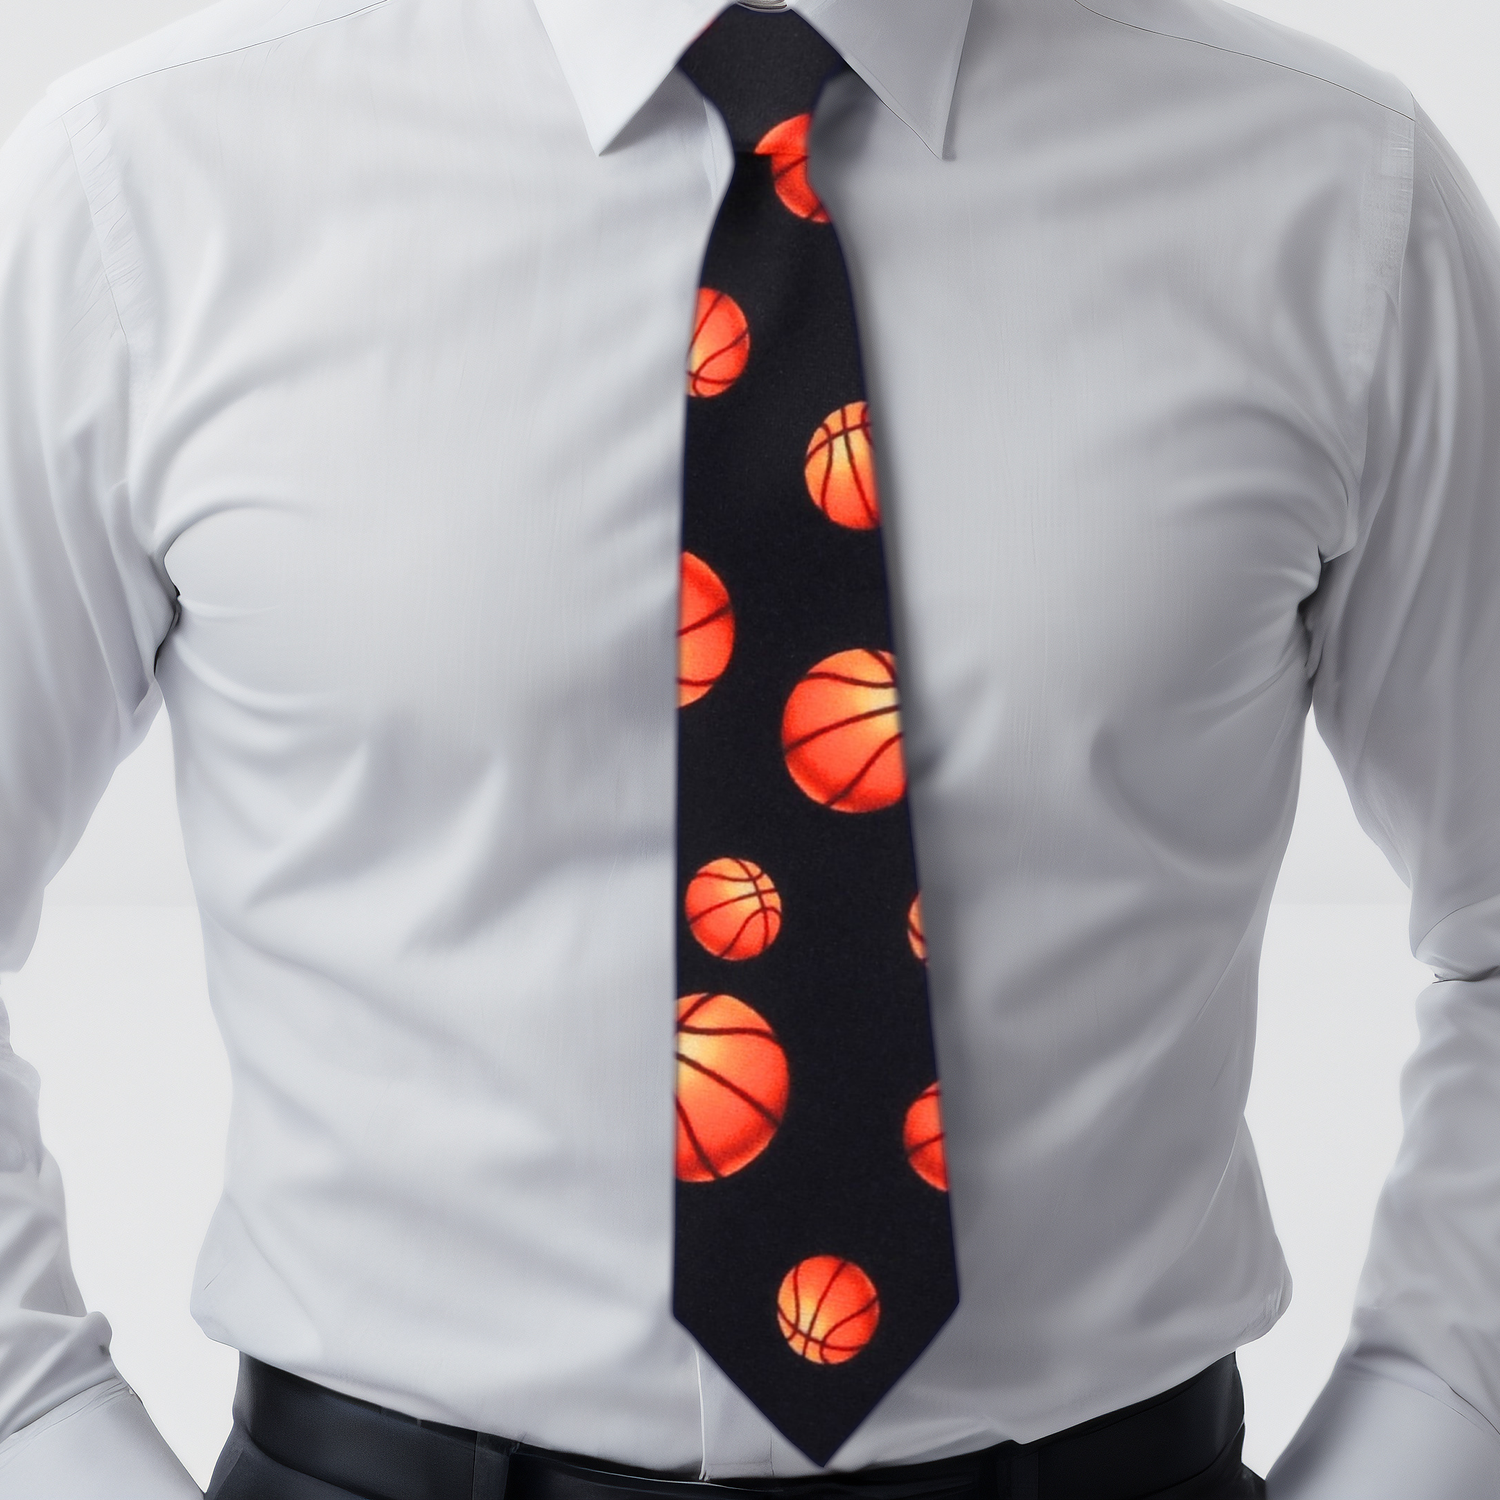 On White Shirt View: Black and Orange Basketball Necktie